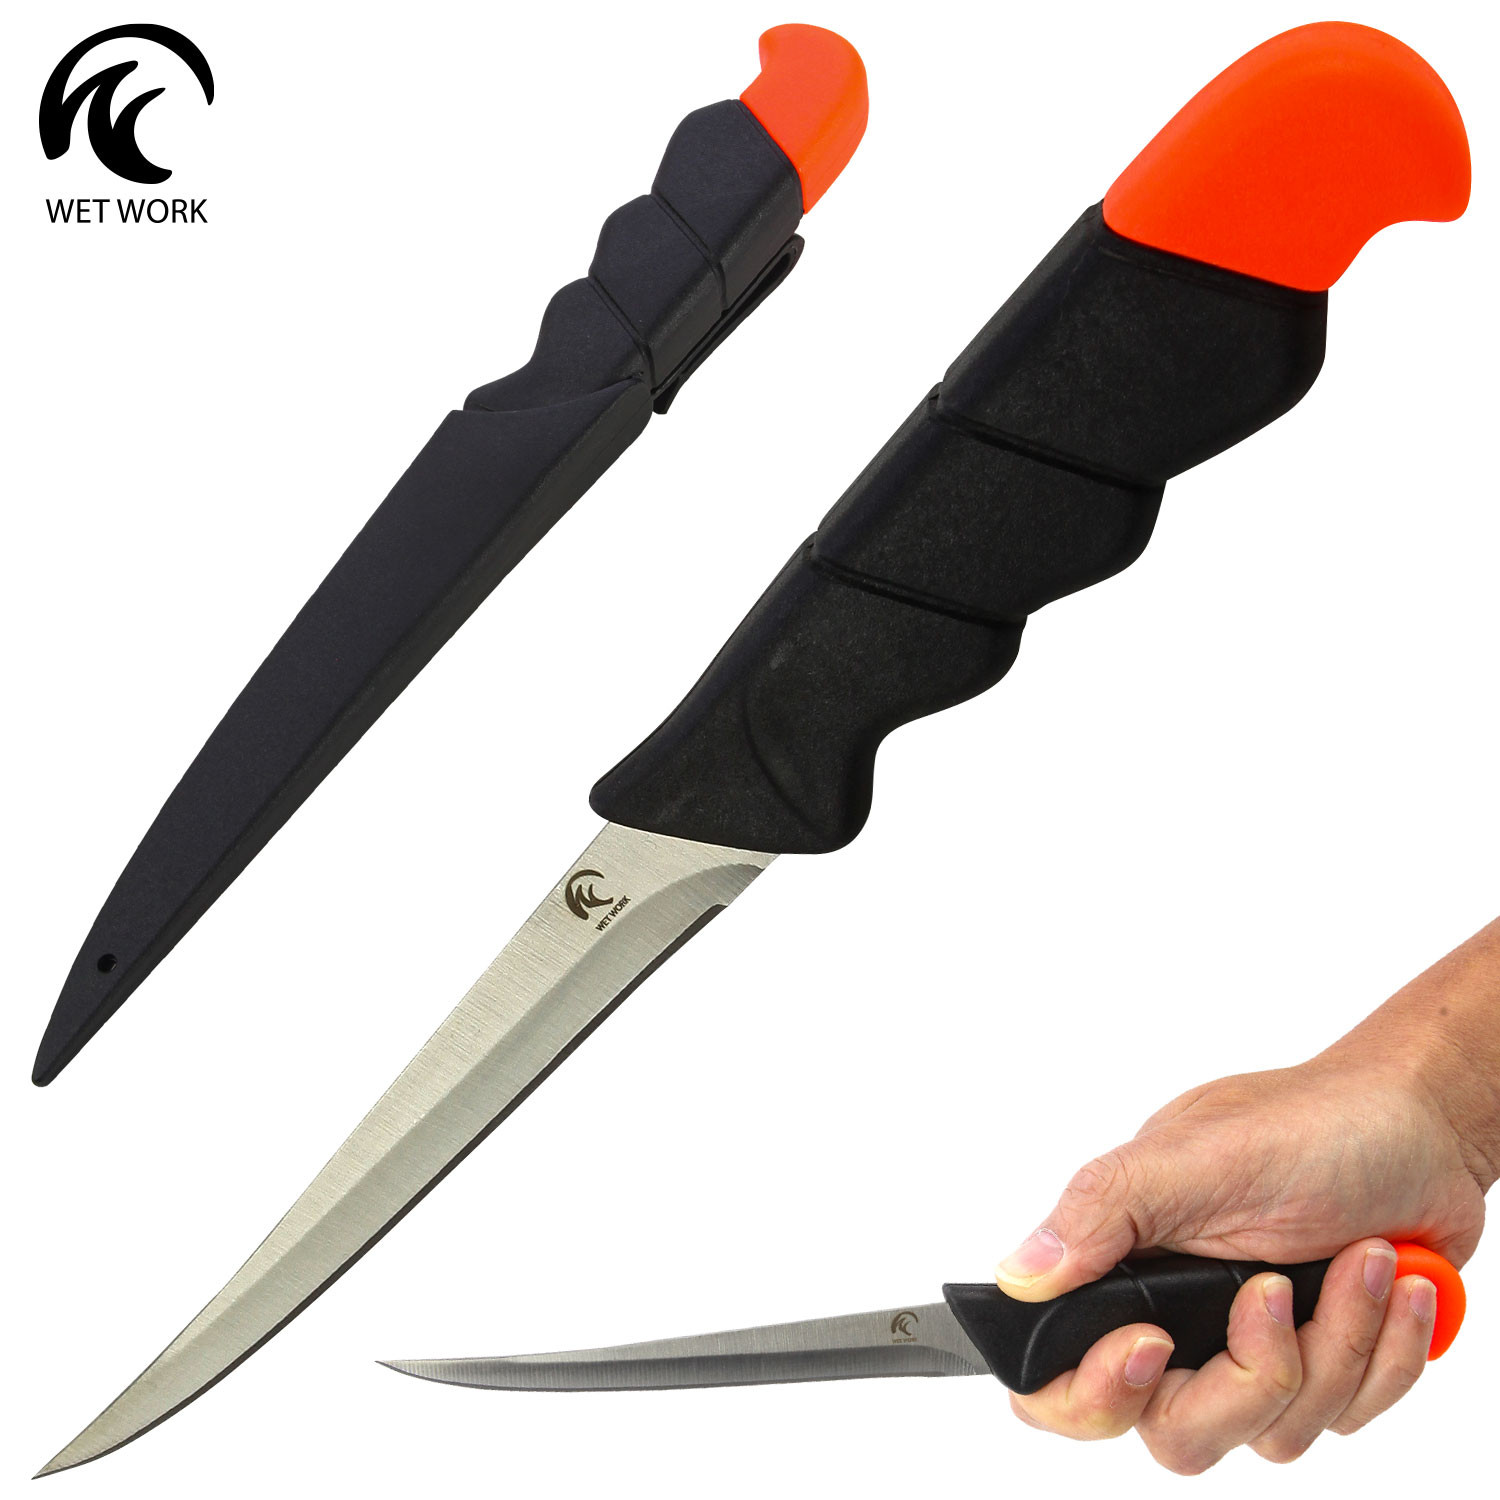 Wet Work Fillet Knife (5" Blade) w/Sheath - Black/Orange $9.99 + Free Shipping